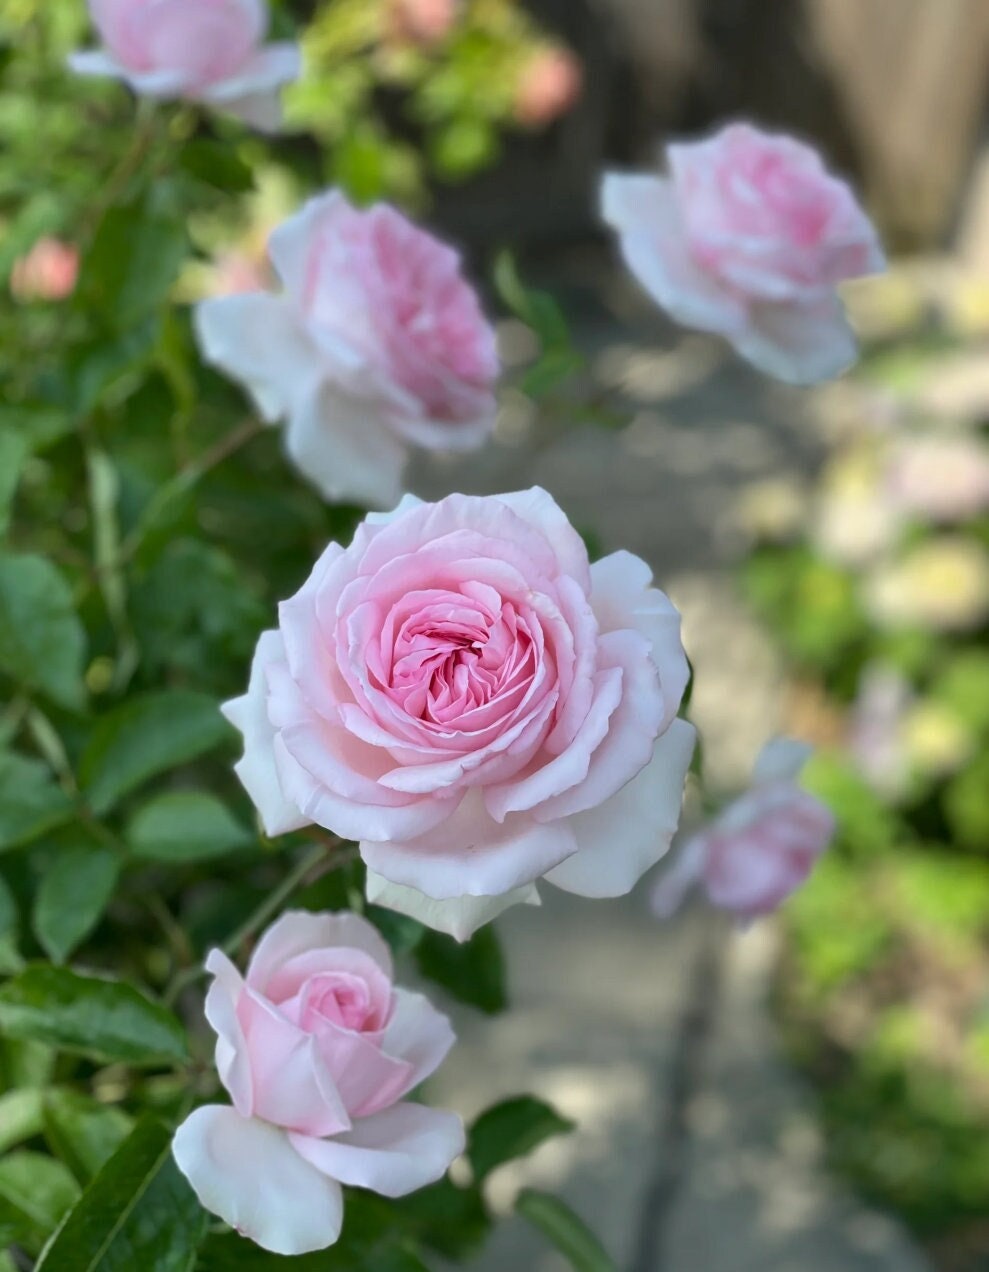 Rose 'Pretty Karen' (楚楚动人) (1 Gal+ Live Plant) Shrub Rose